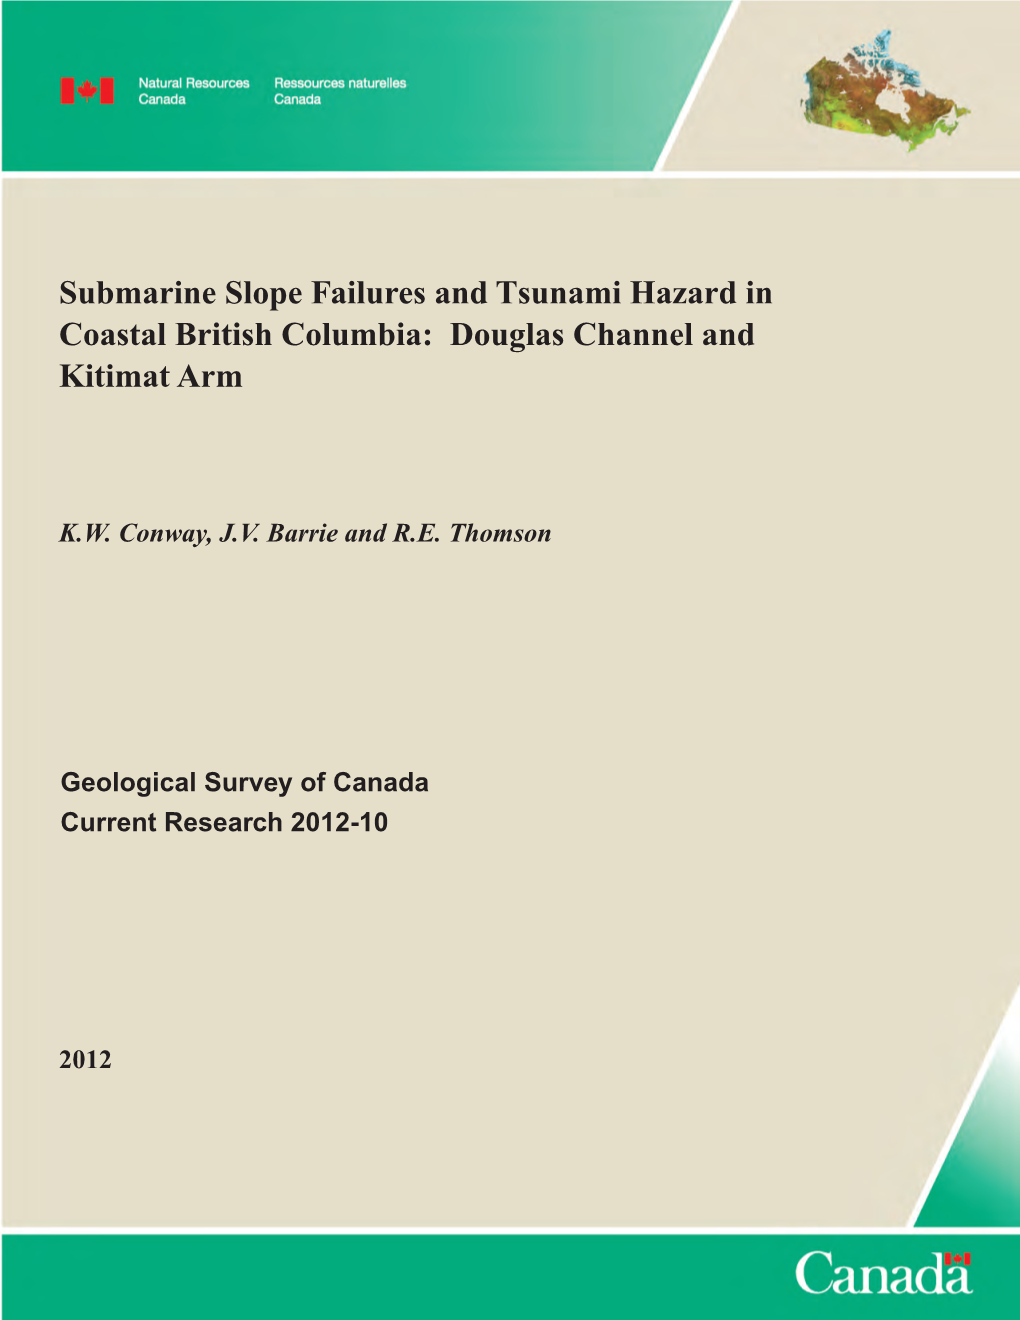 Submarine Slope Failures and Tsunami Hazard in Coastal British Columbia: Douglas Channel and Kitimat Arm